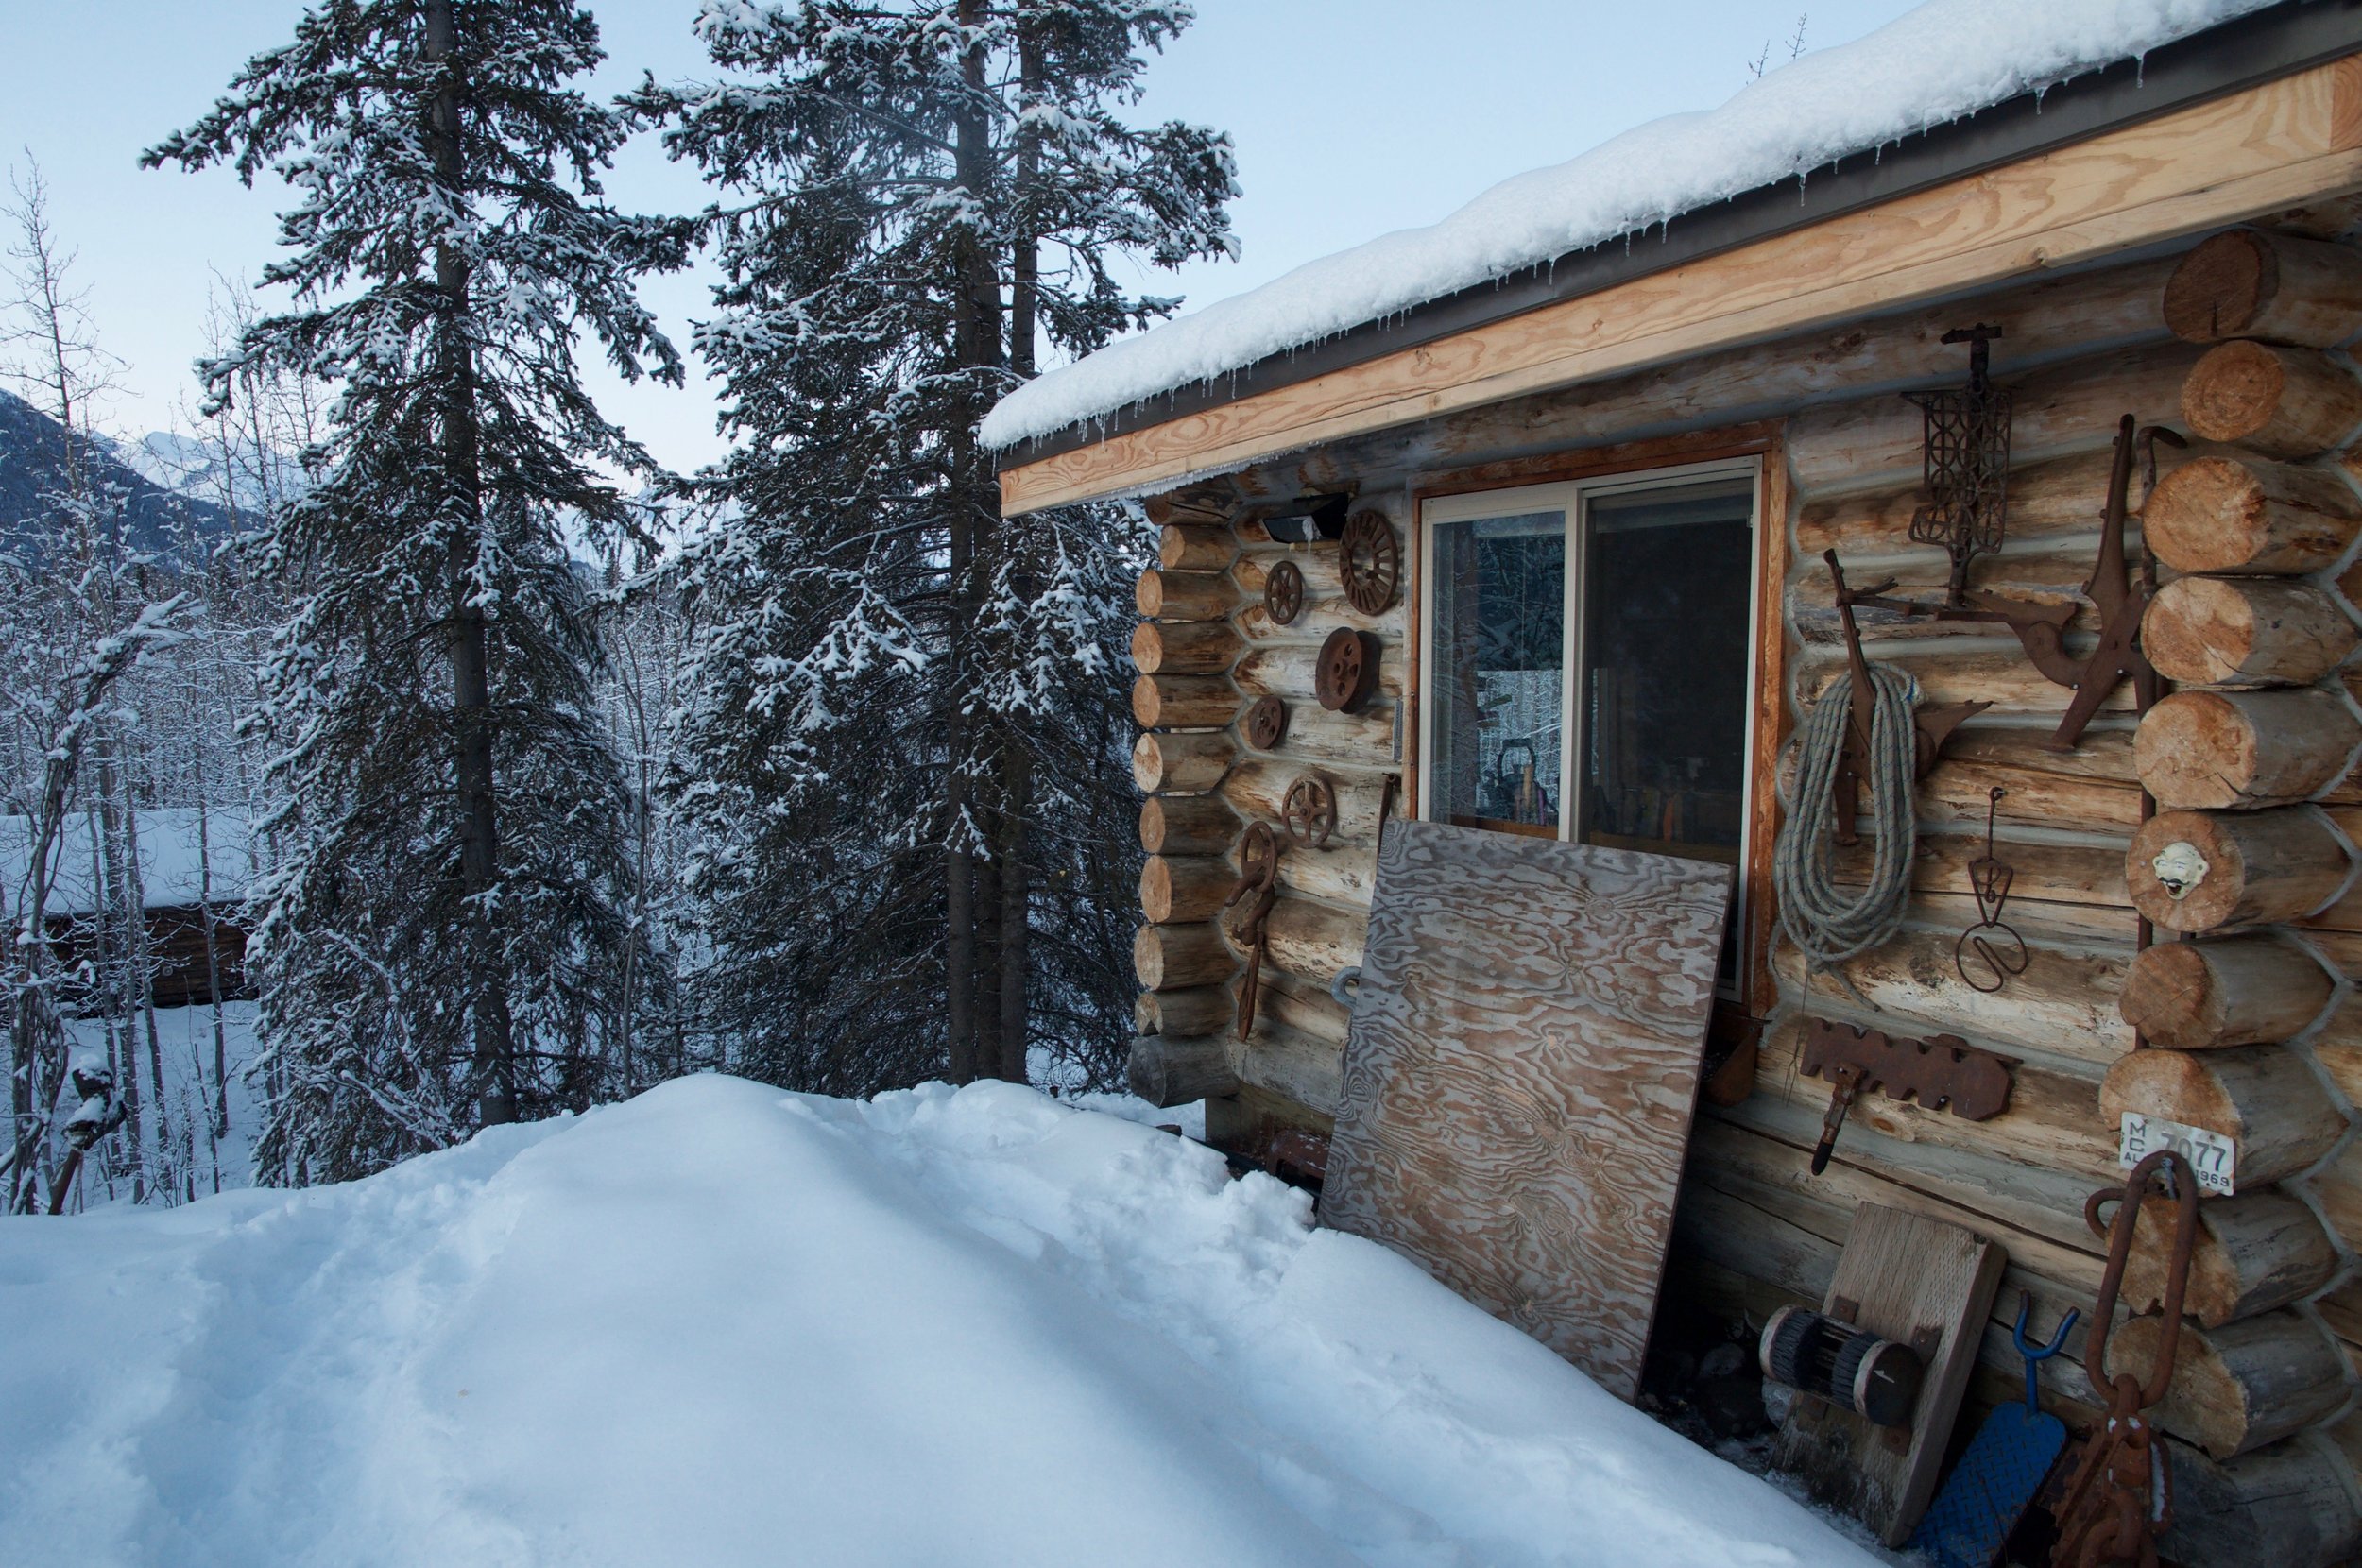 Malcom Vance's log cabin